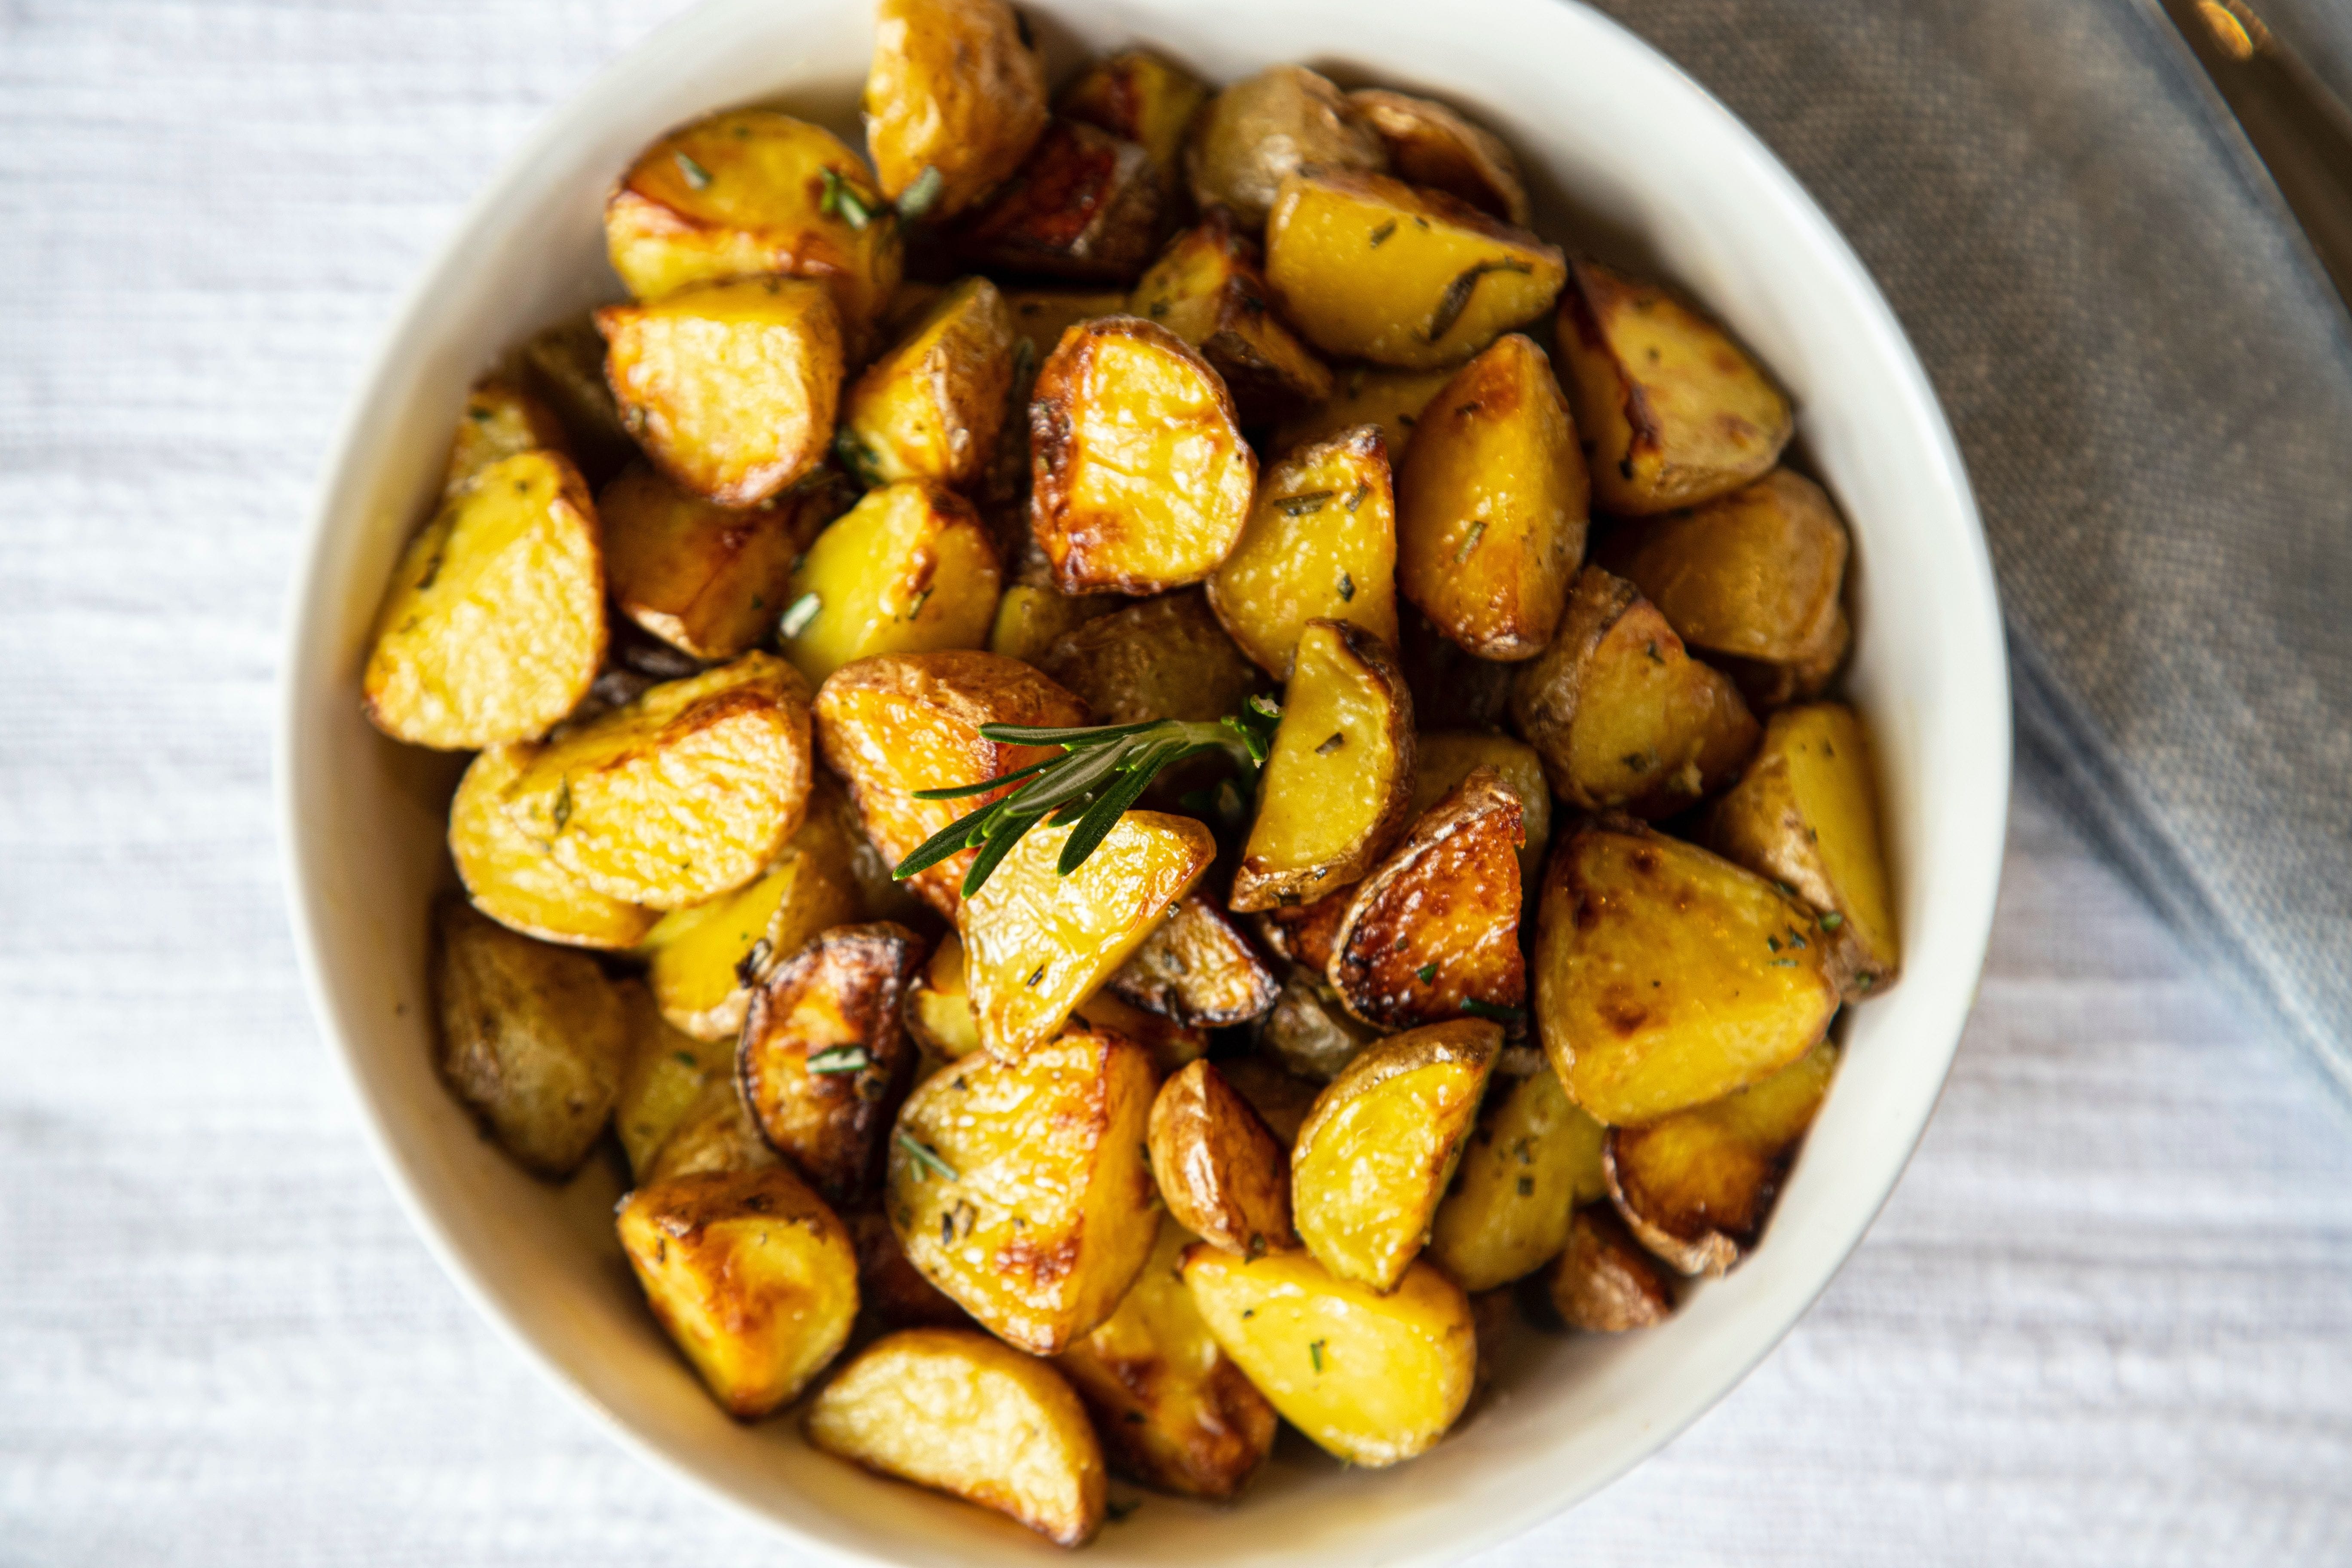 Homemade roasted potatoes